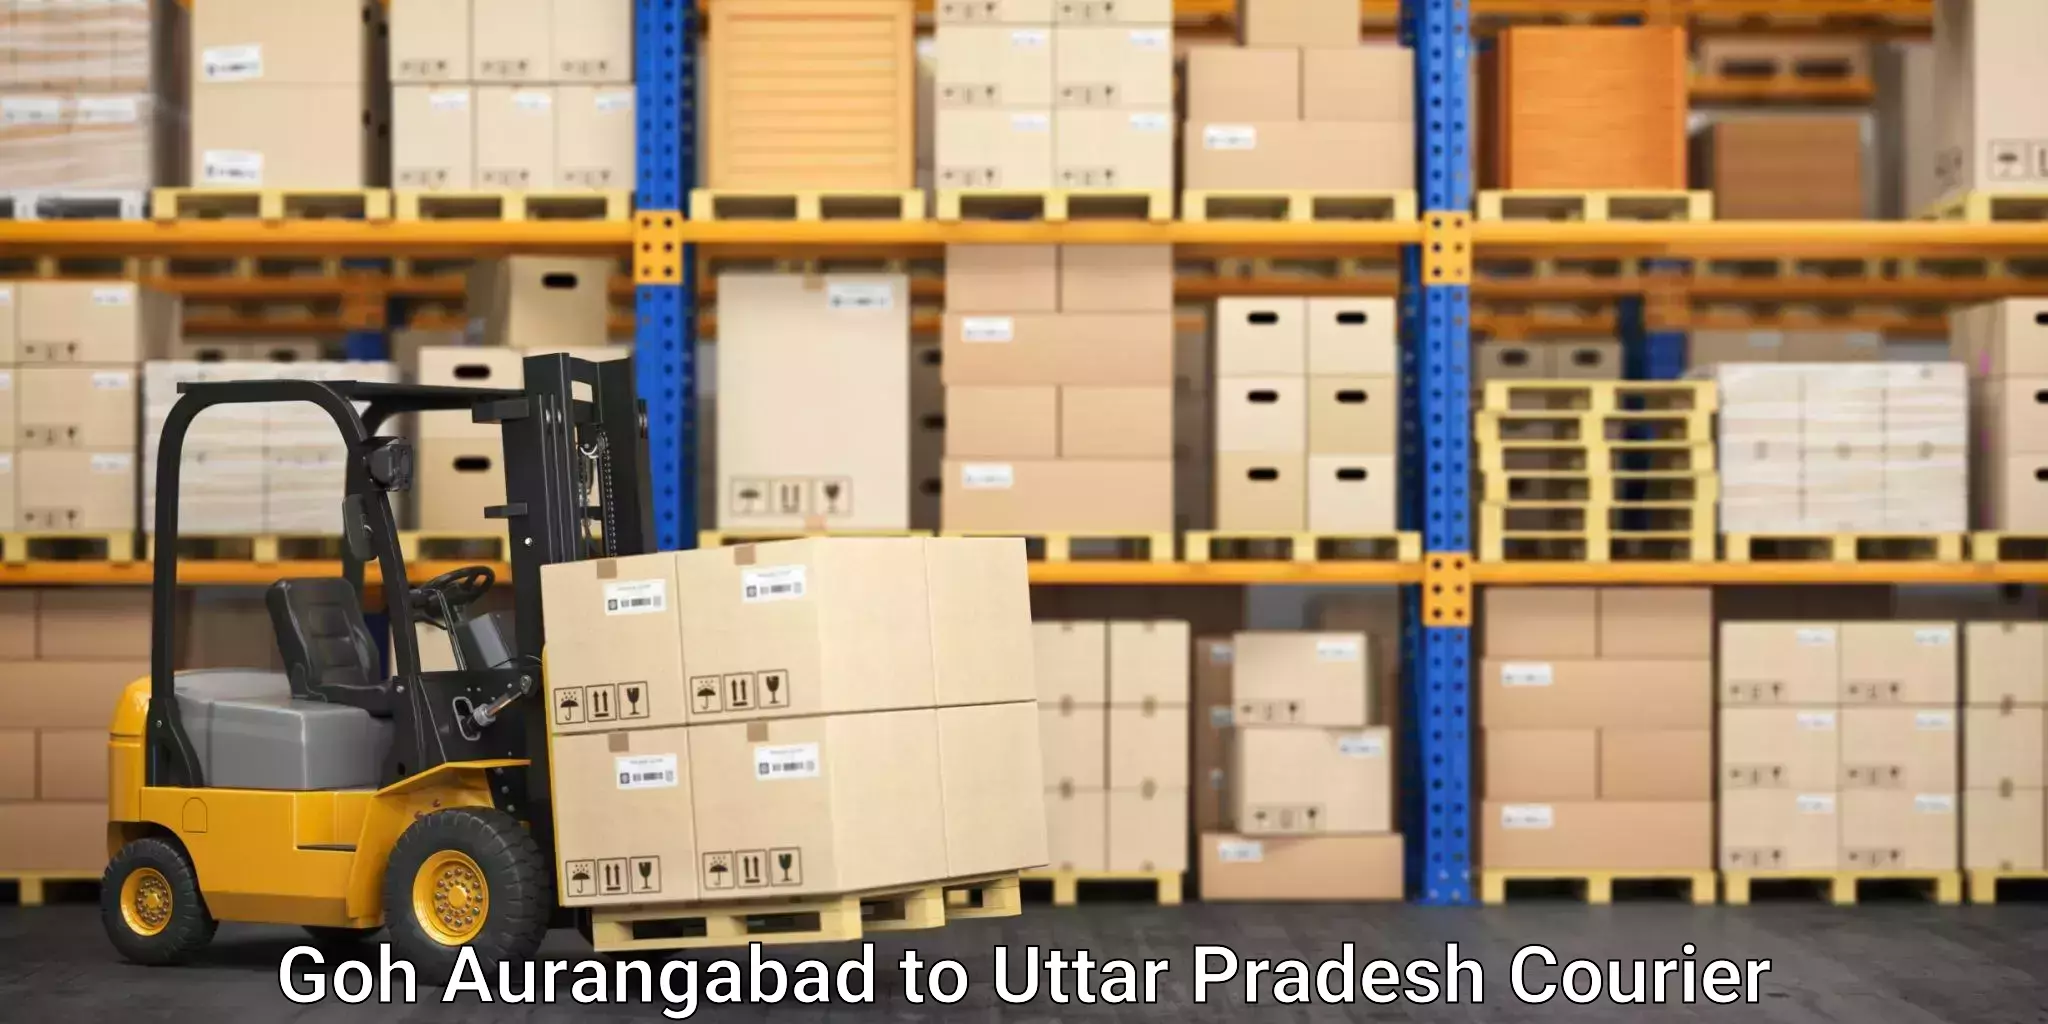 Furniture relocation experts Goh Aurangabad to Sant Kabir Nagar